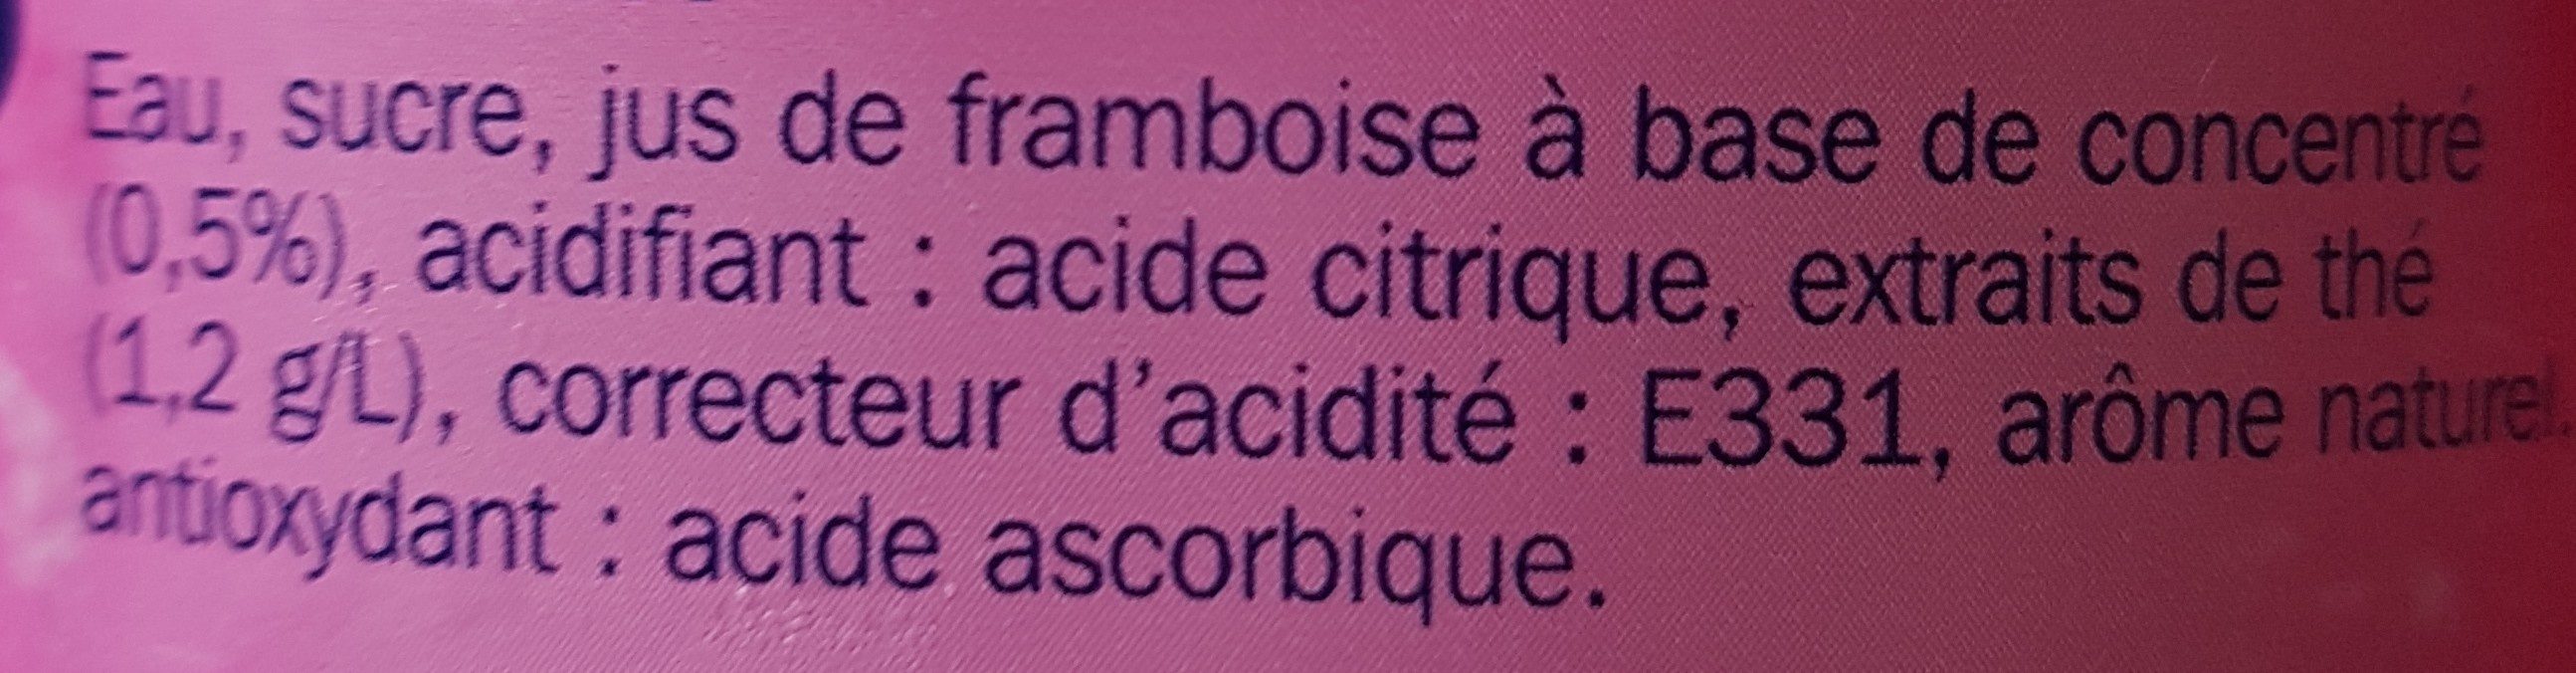 Thé glacé saveur framboise - Ingredients - fr